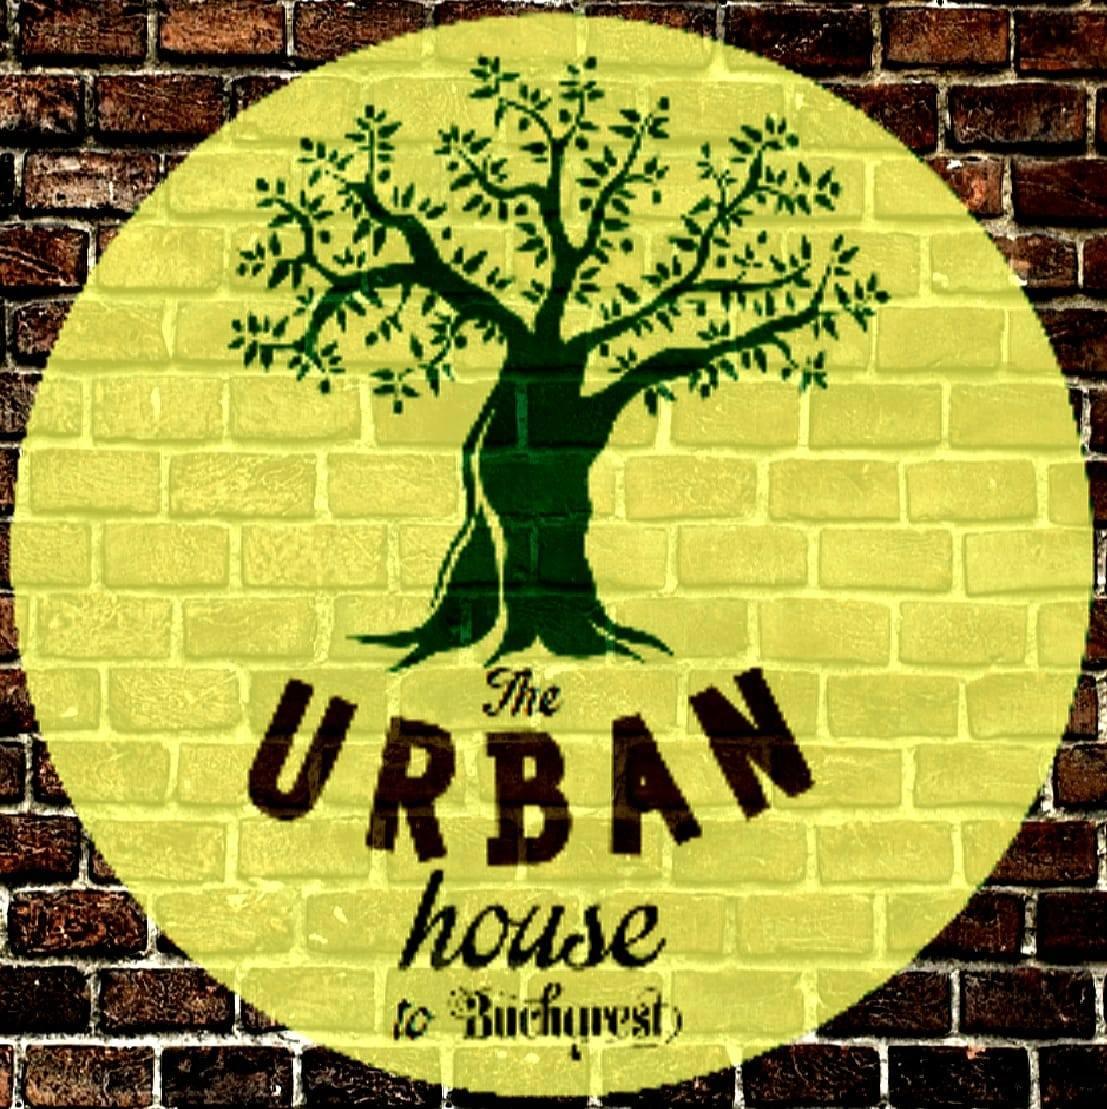 Urban House